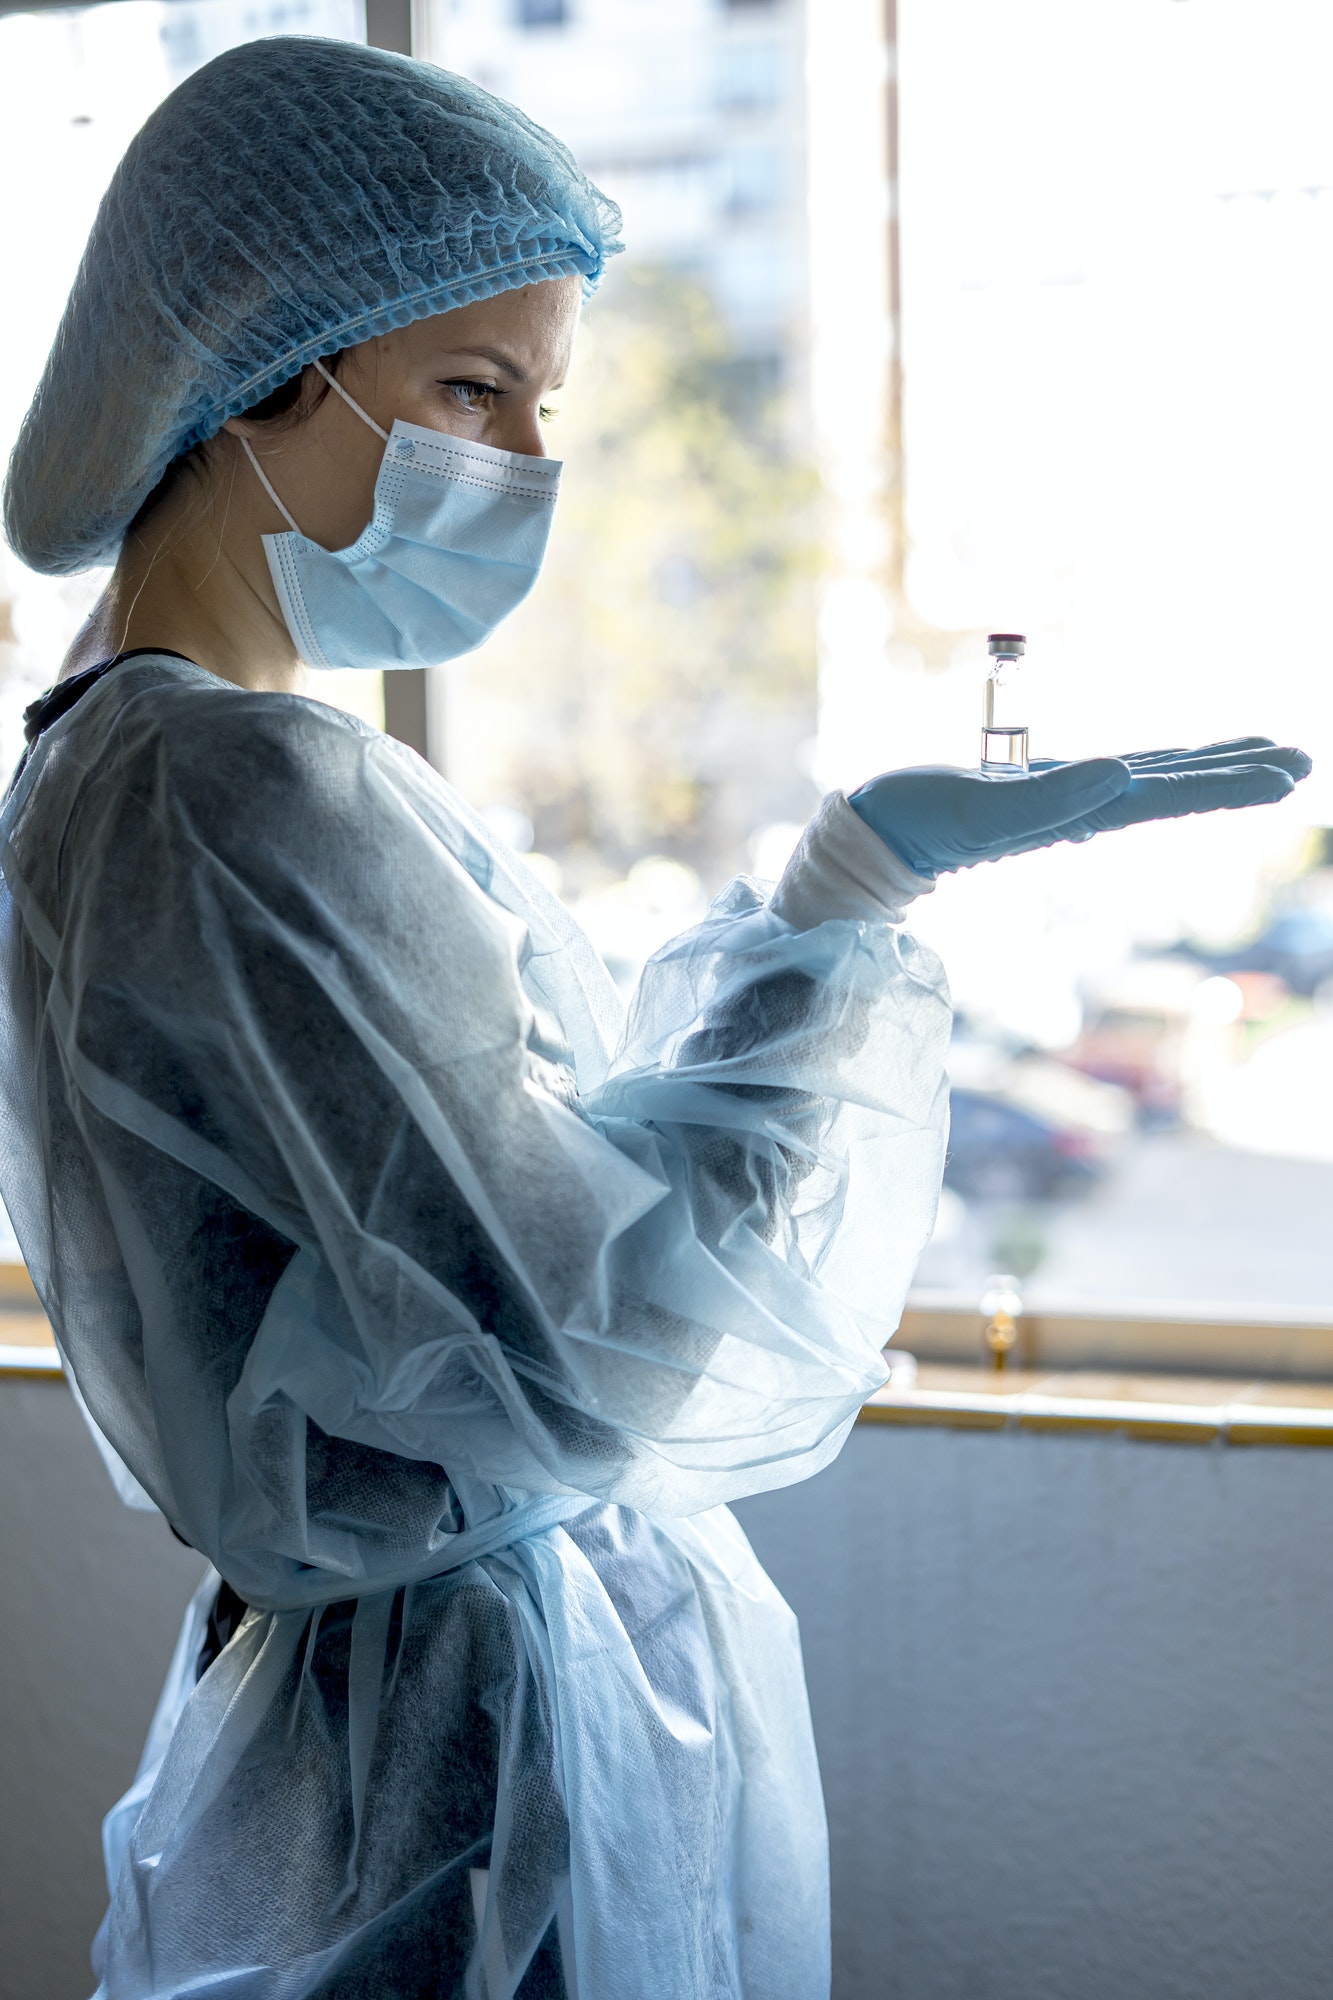 Doctor or laborant holding tube with nCoV Coronavirus vaccine for 2019-nCoV virus